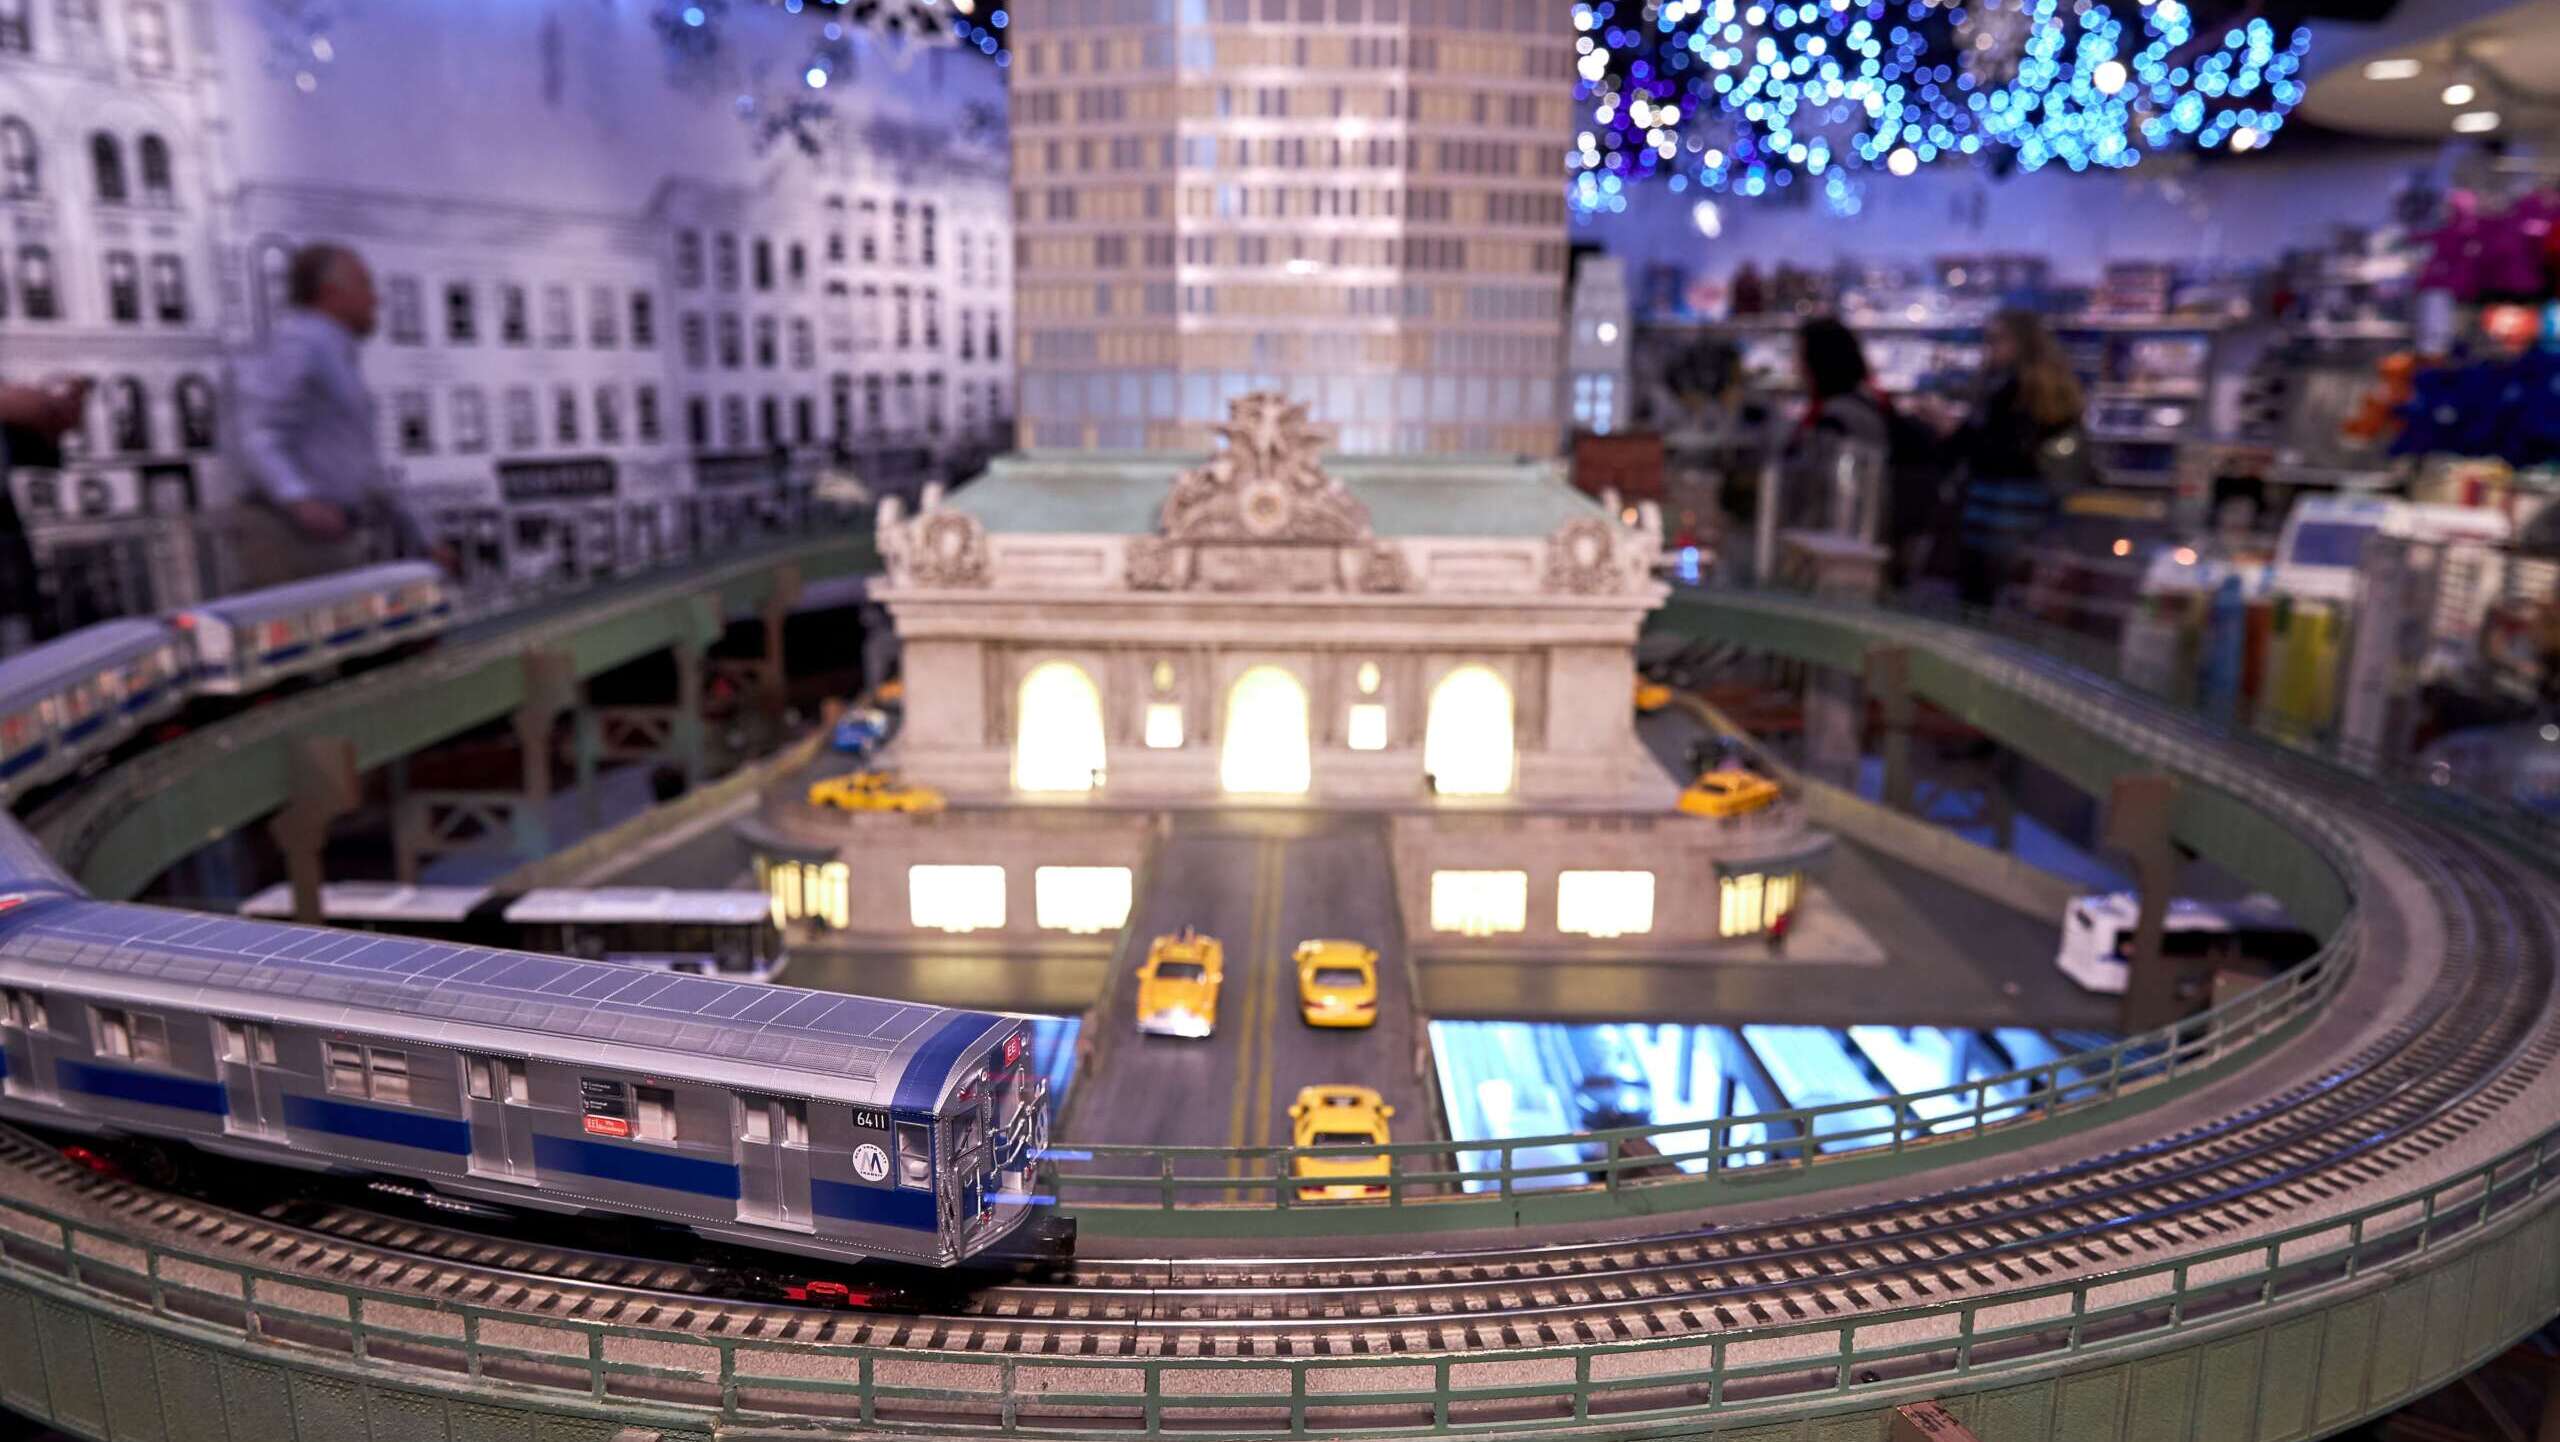 Model vintage subway train circling model of Grand Central Terminal